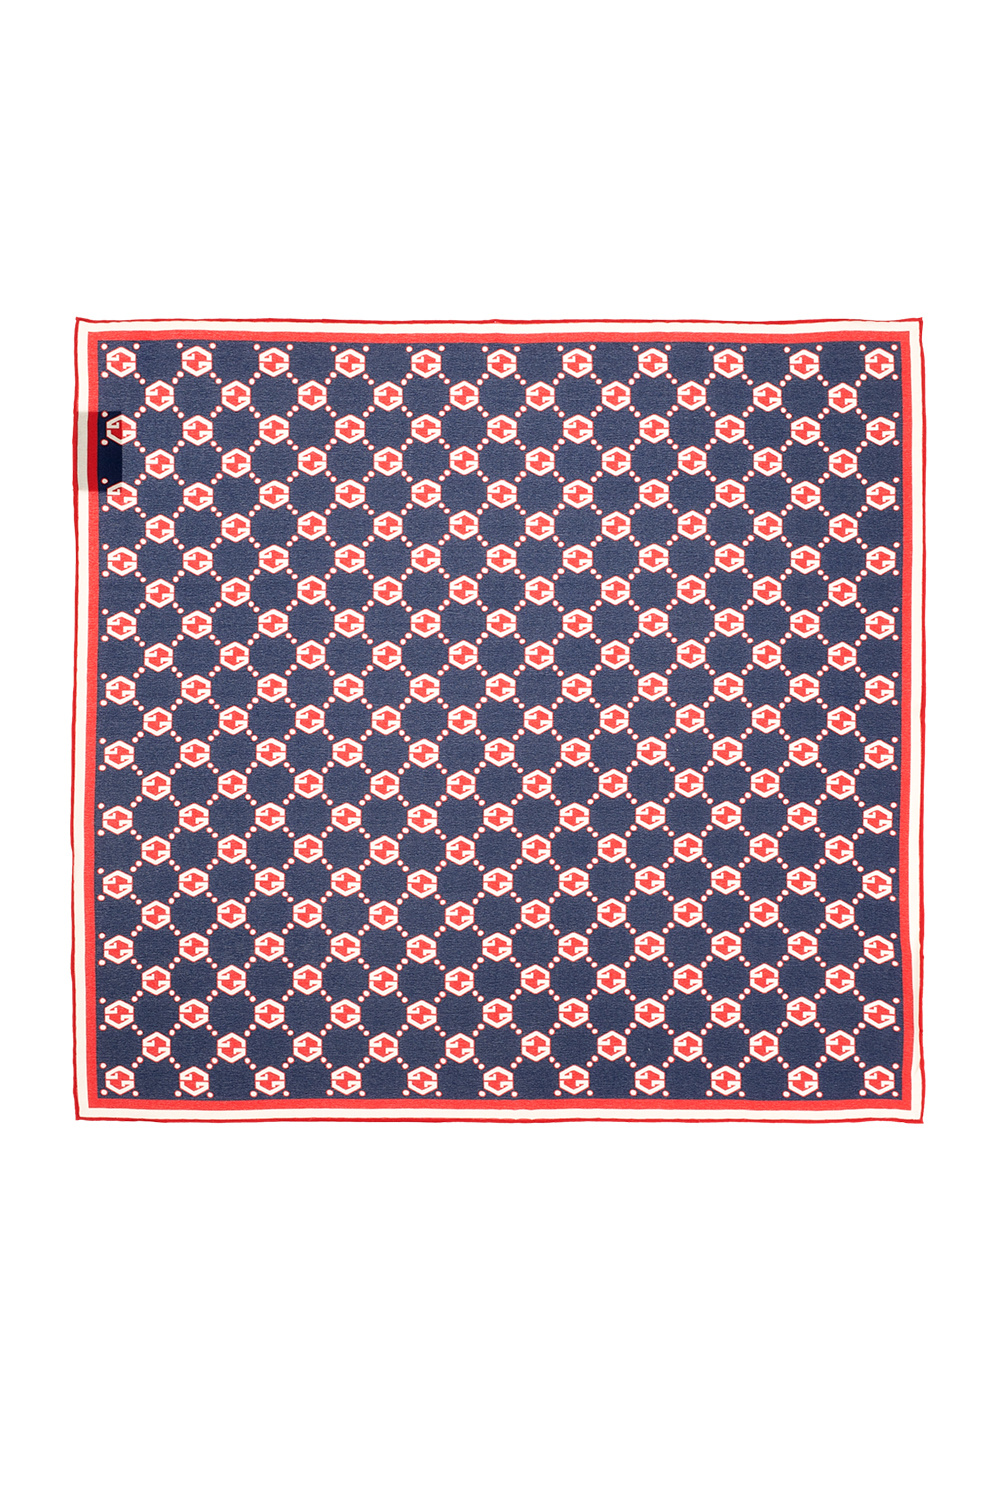 Shop GUCCI 2021-22FW Symbols silk pocket square (630519 4G001 4000) by  baby'sbreath*